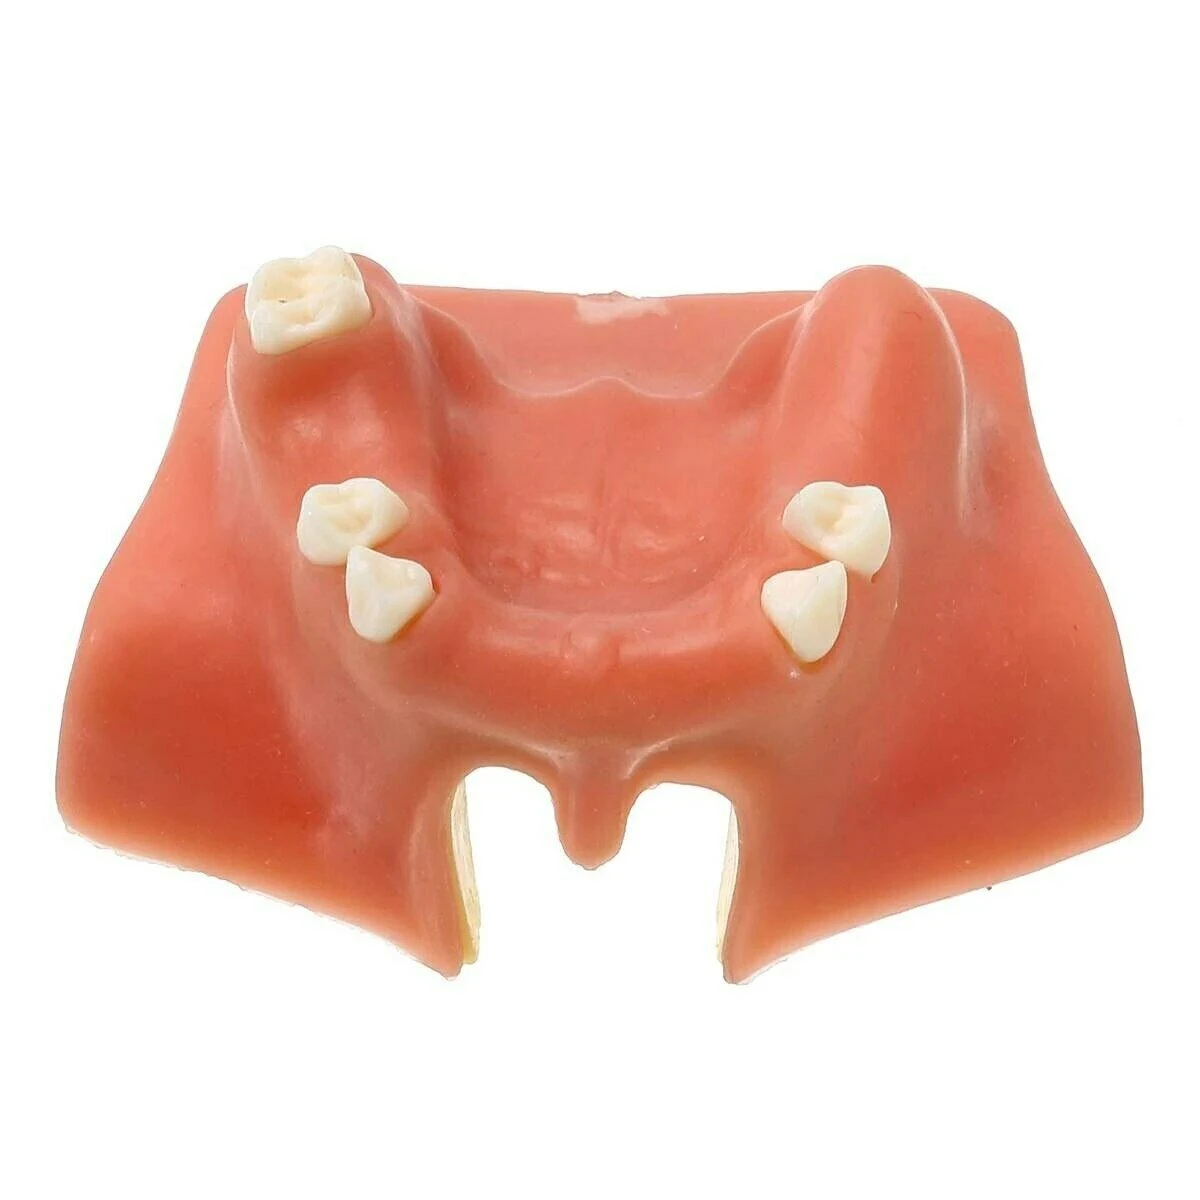 

1pcs Dental Model Sinus Lift Practice Teaching Teeth Upper Jaw Study Demonstration Tooth Implant Simulator Typodont Dentistry